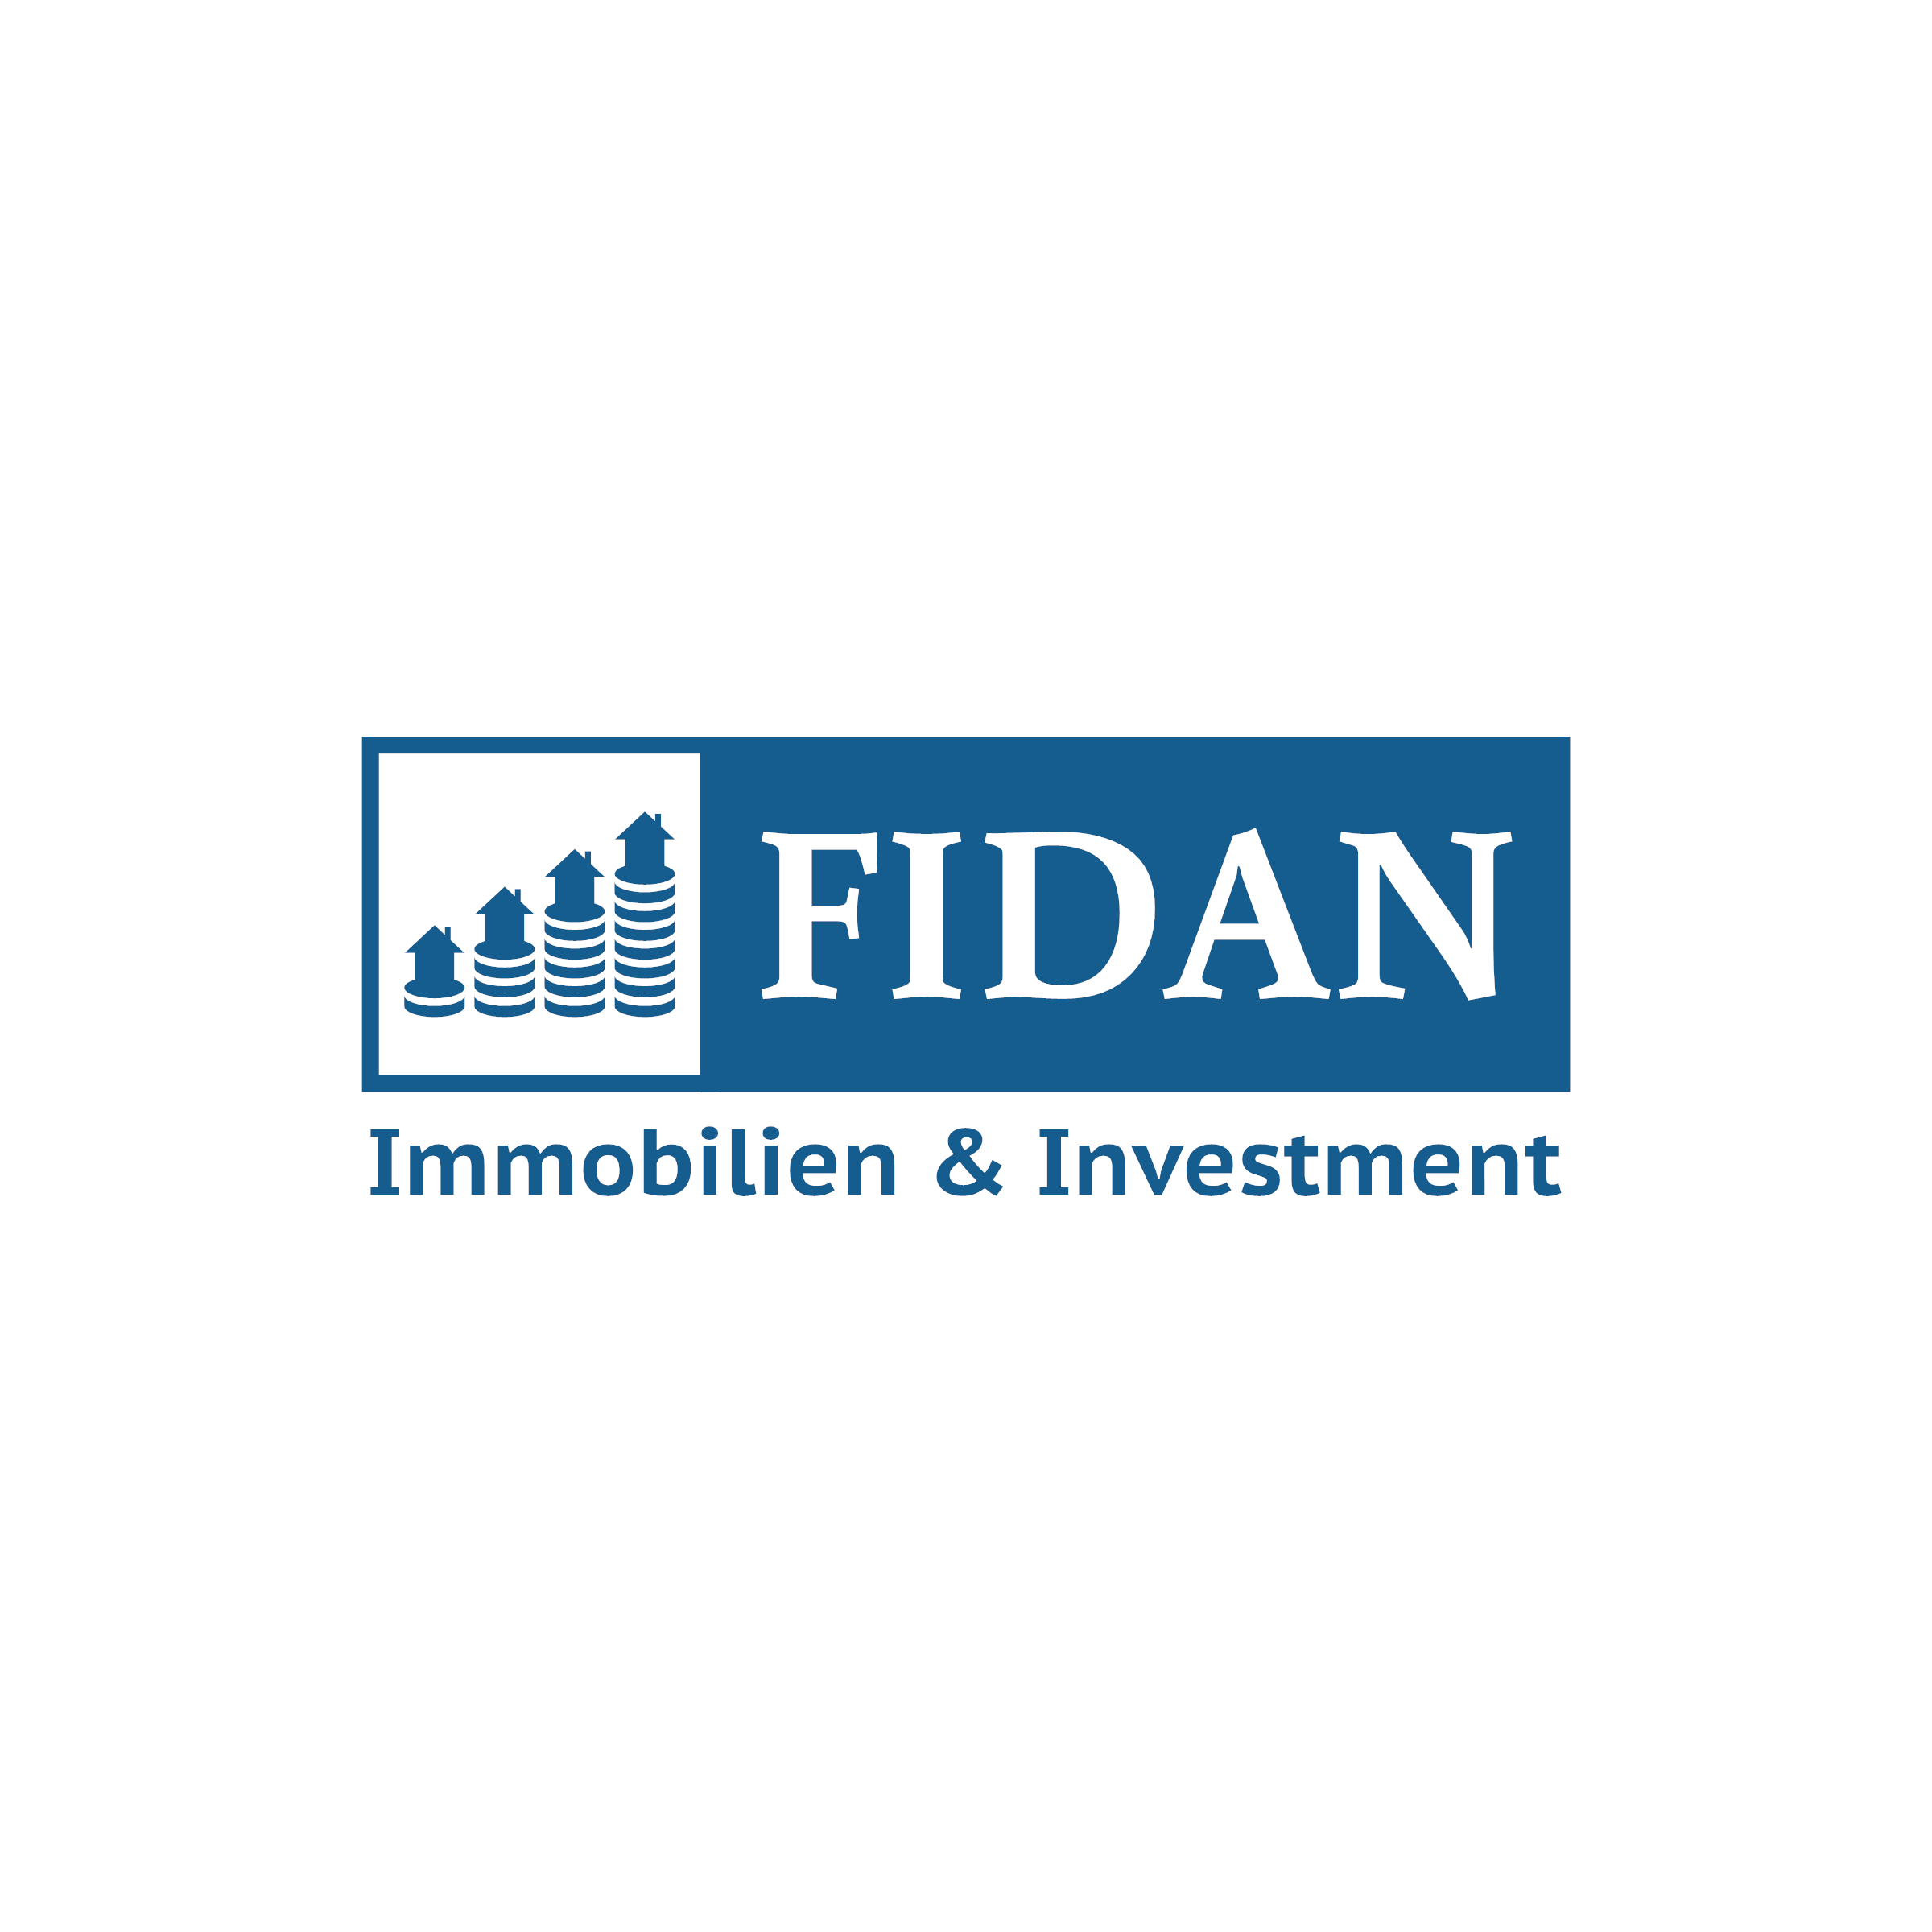 Fidan Immobilien & Investment in Schwarzenbach an der Saale - Logo